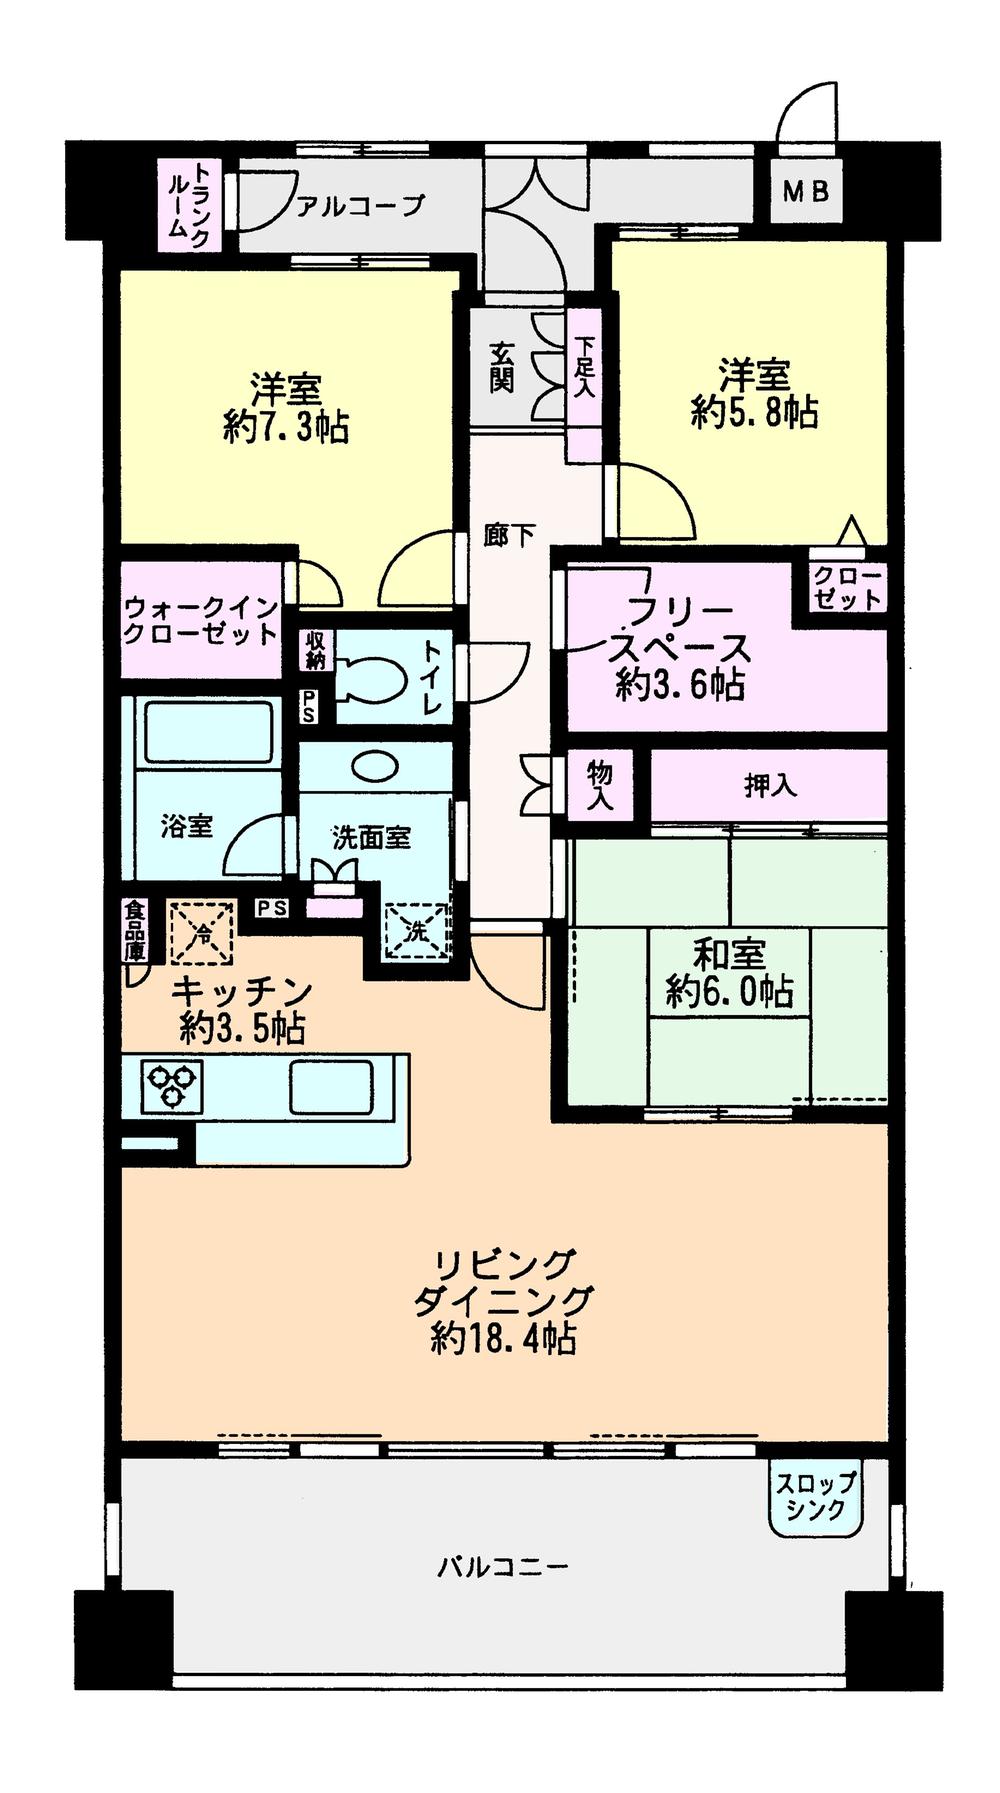 Floor plan. 3LDK + S (storeroom), Price 26,800,000 yen, Occupied area 98.45 sq m , Balcony area 16 sq m